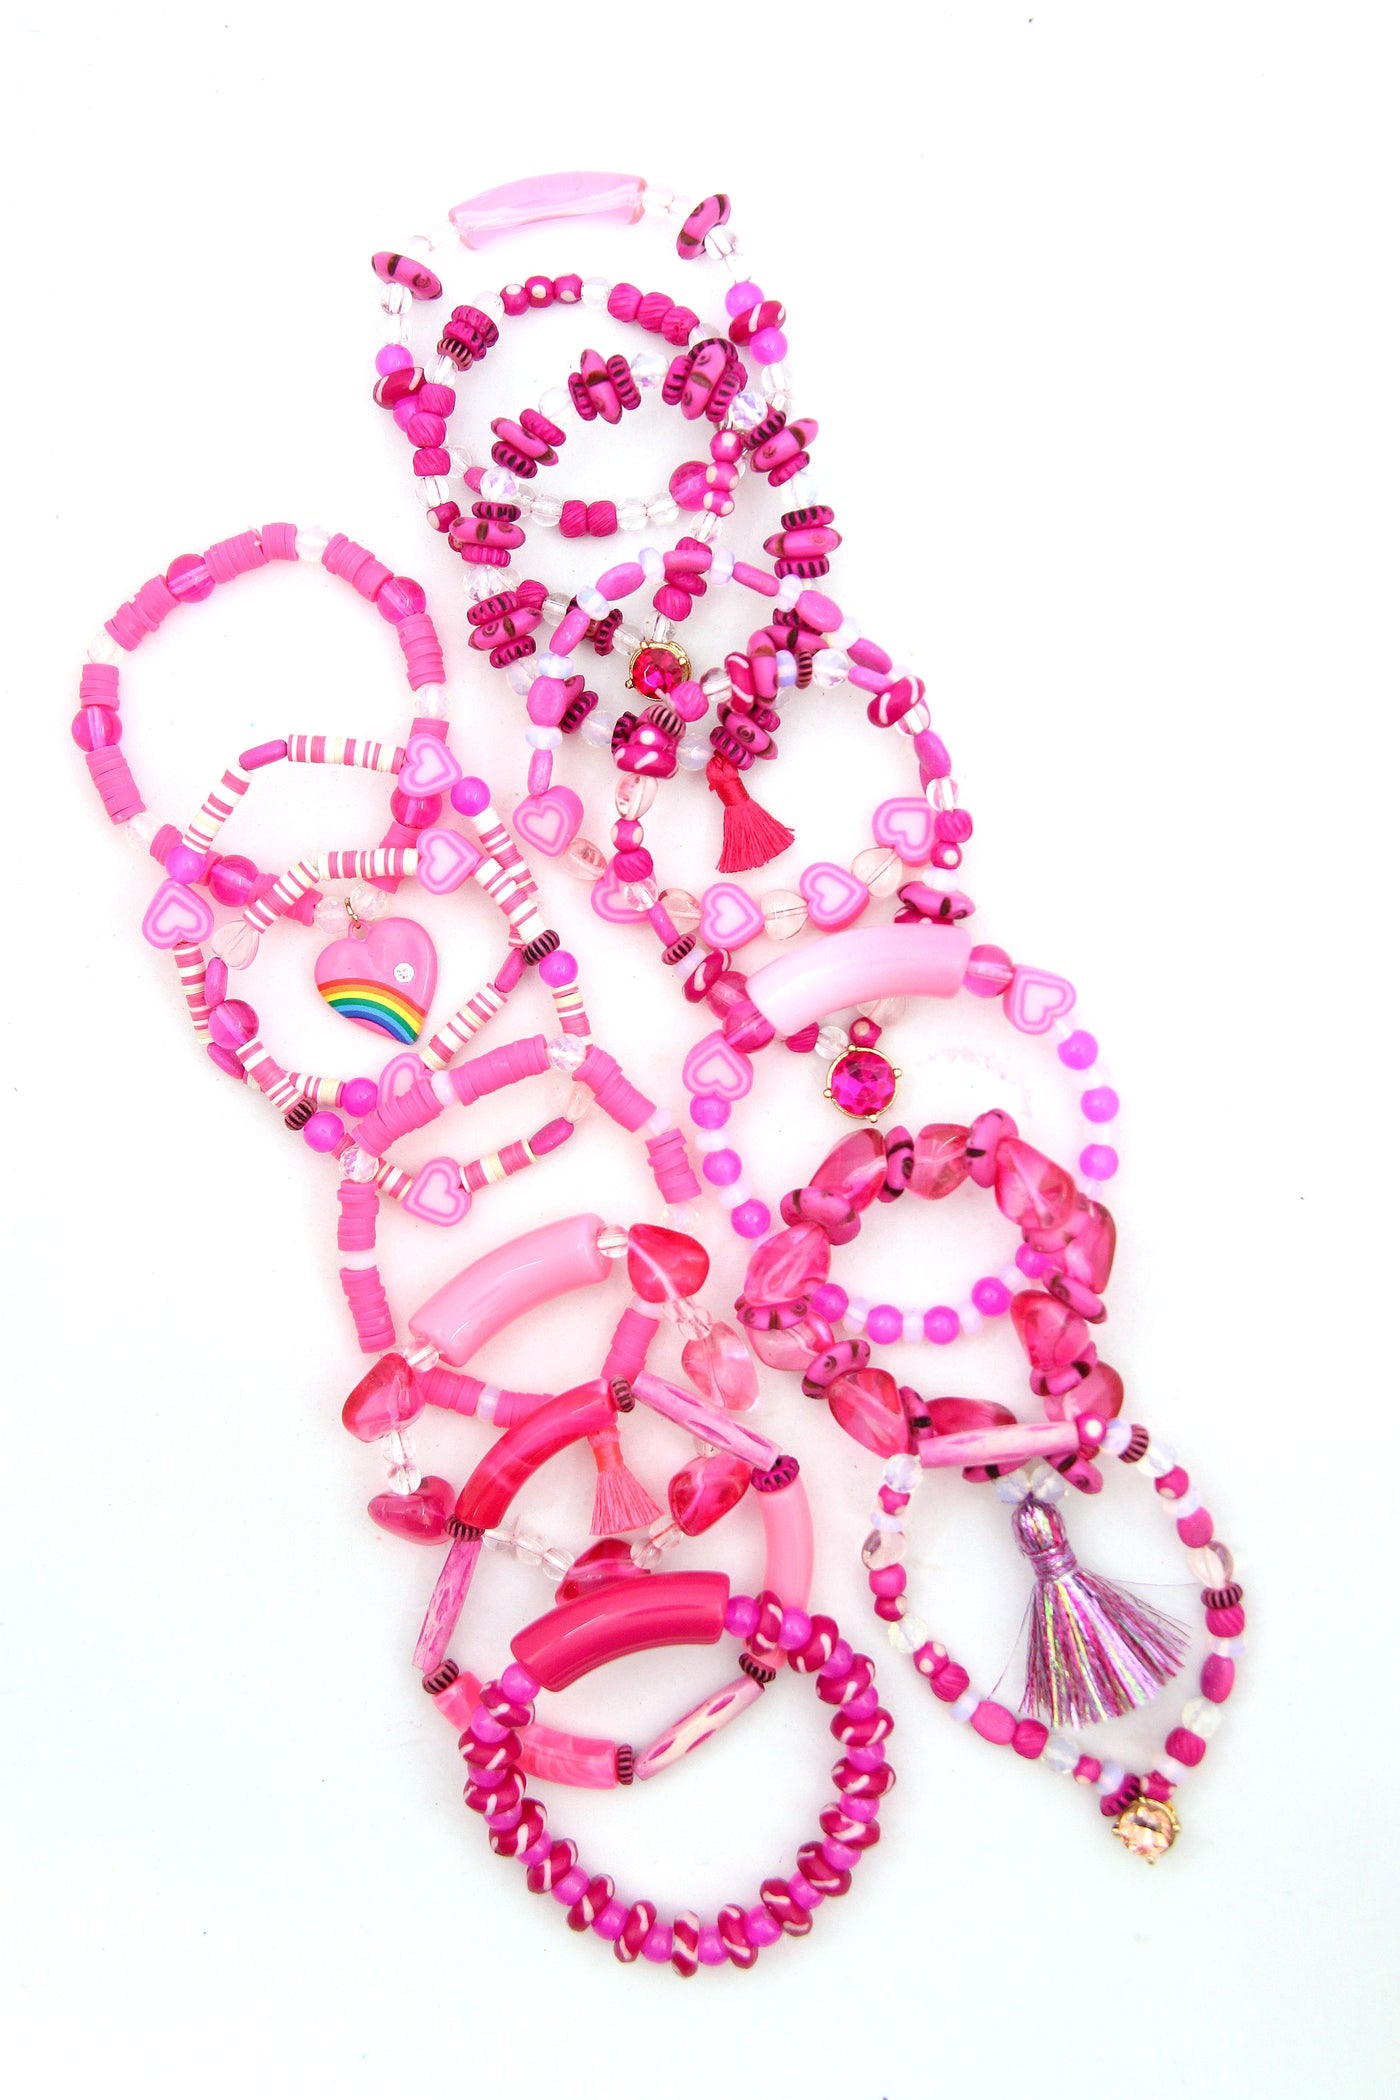 GIOIA Barbie Pink Heart & Unicorn Charm Bracelet : Amazon.co.uk: Fashion